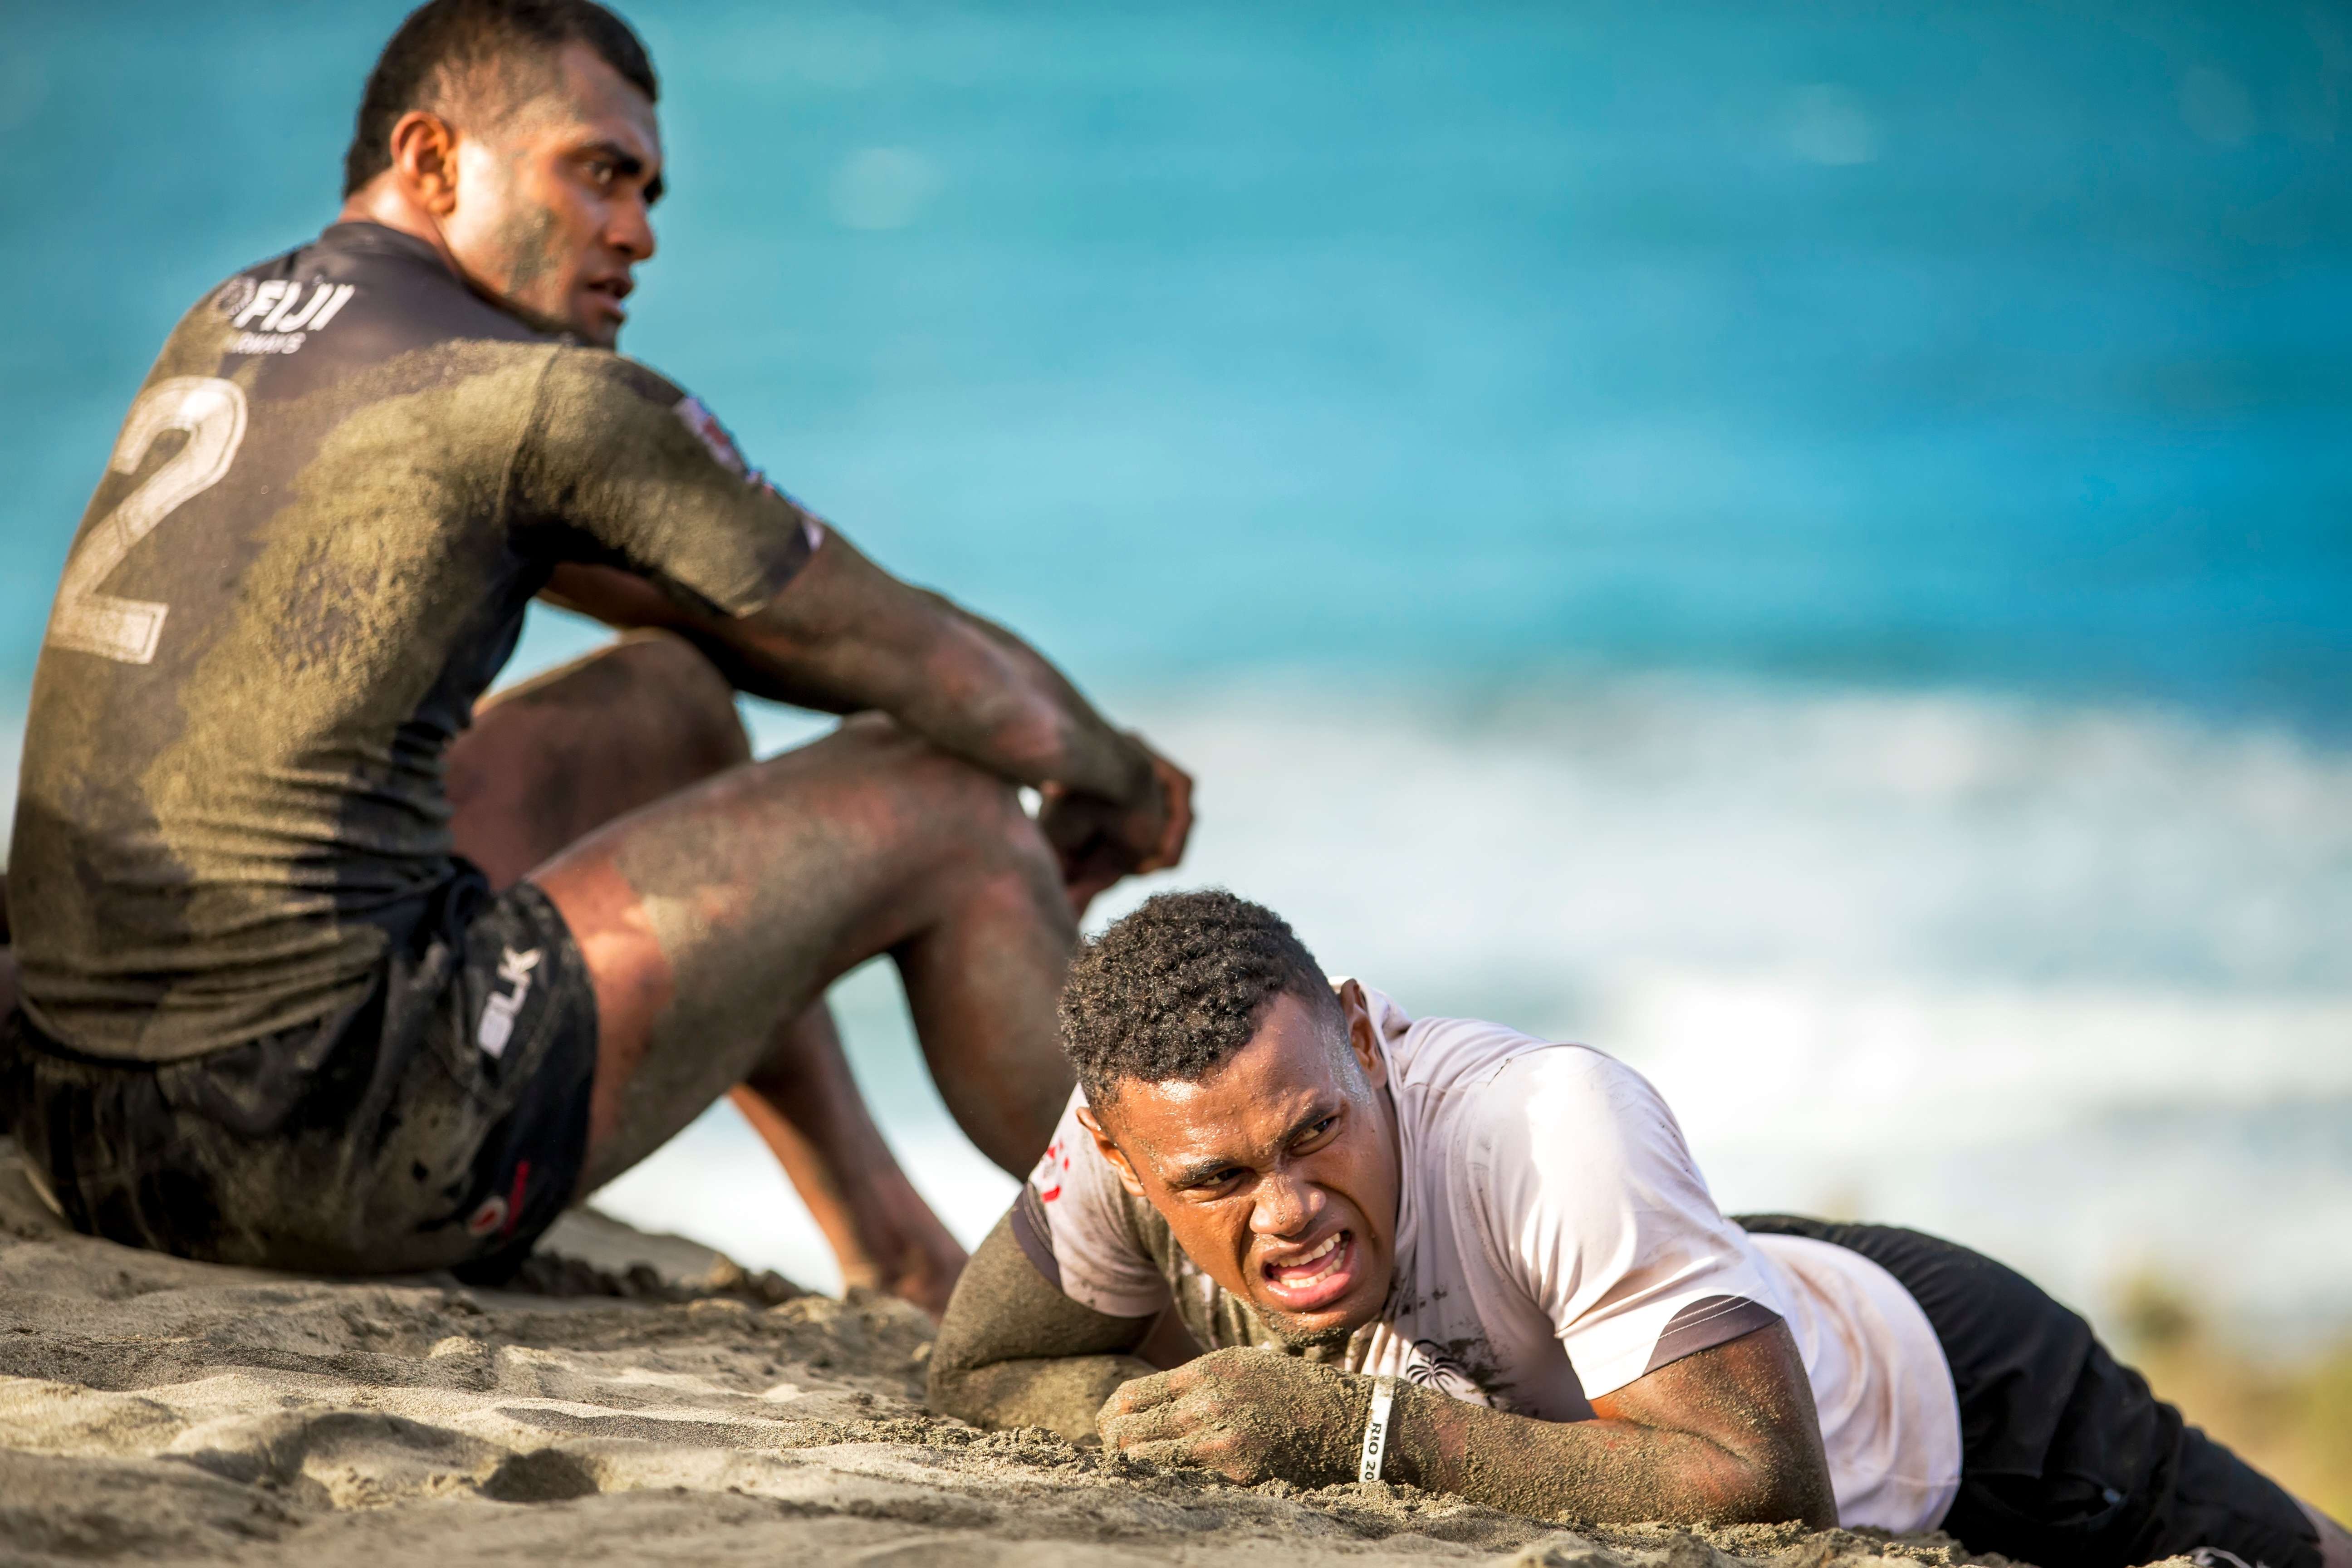 Fiji players training on the beach. Photo: Zoomfiji